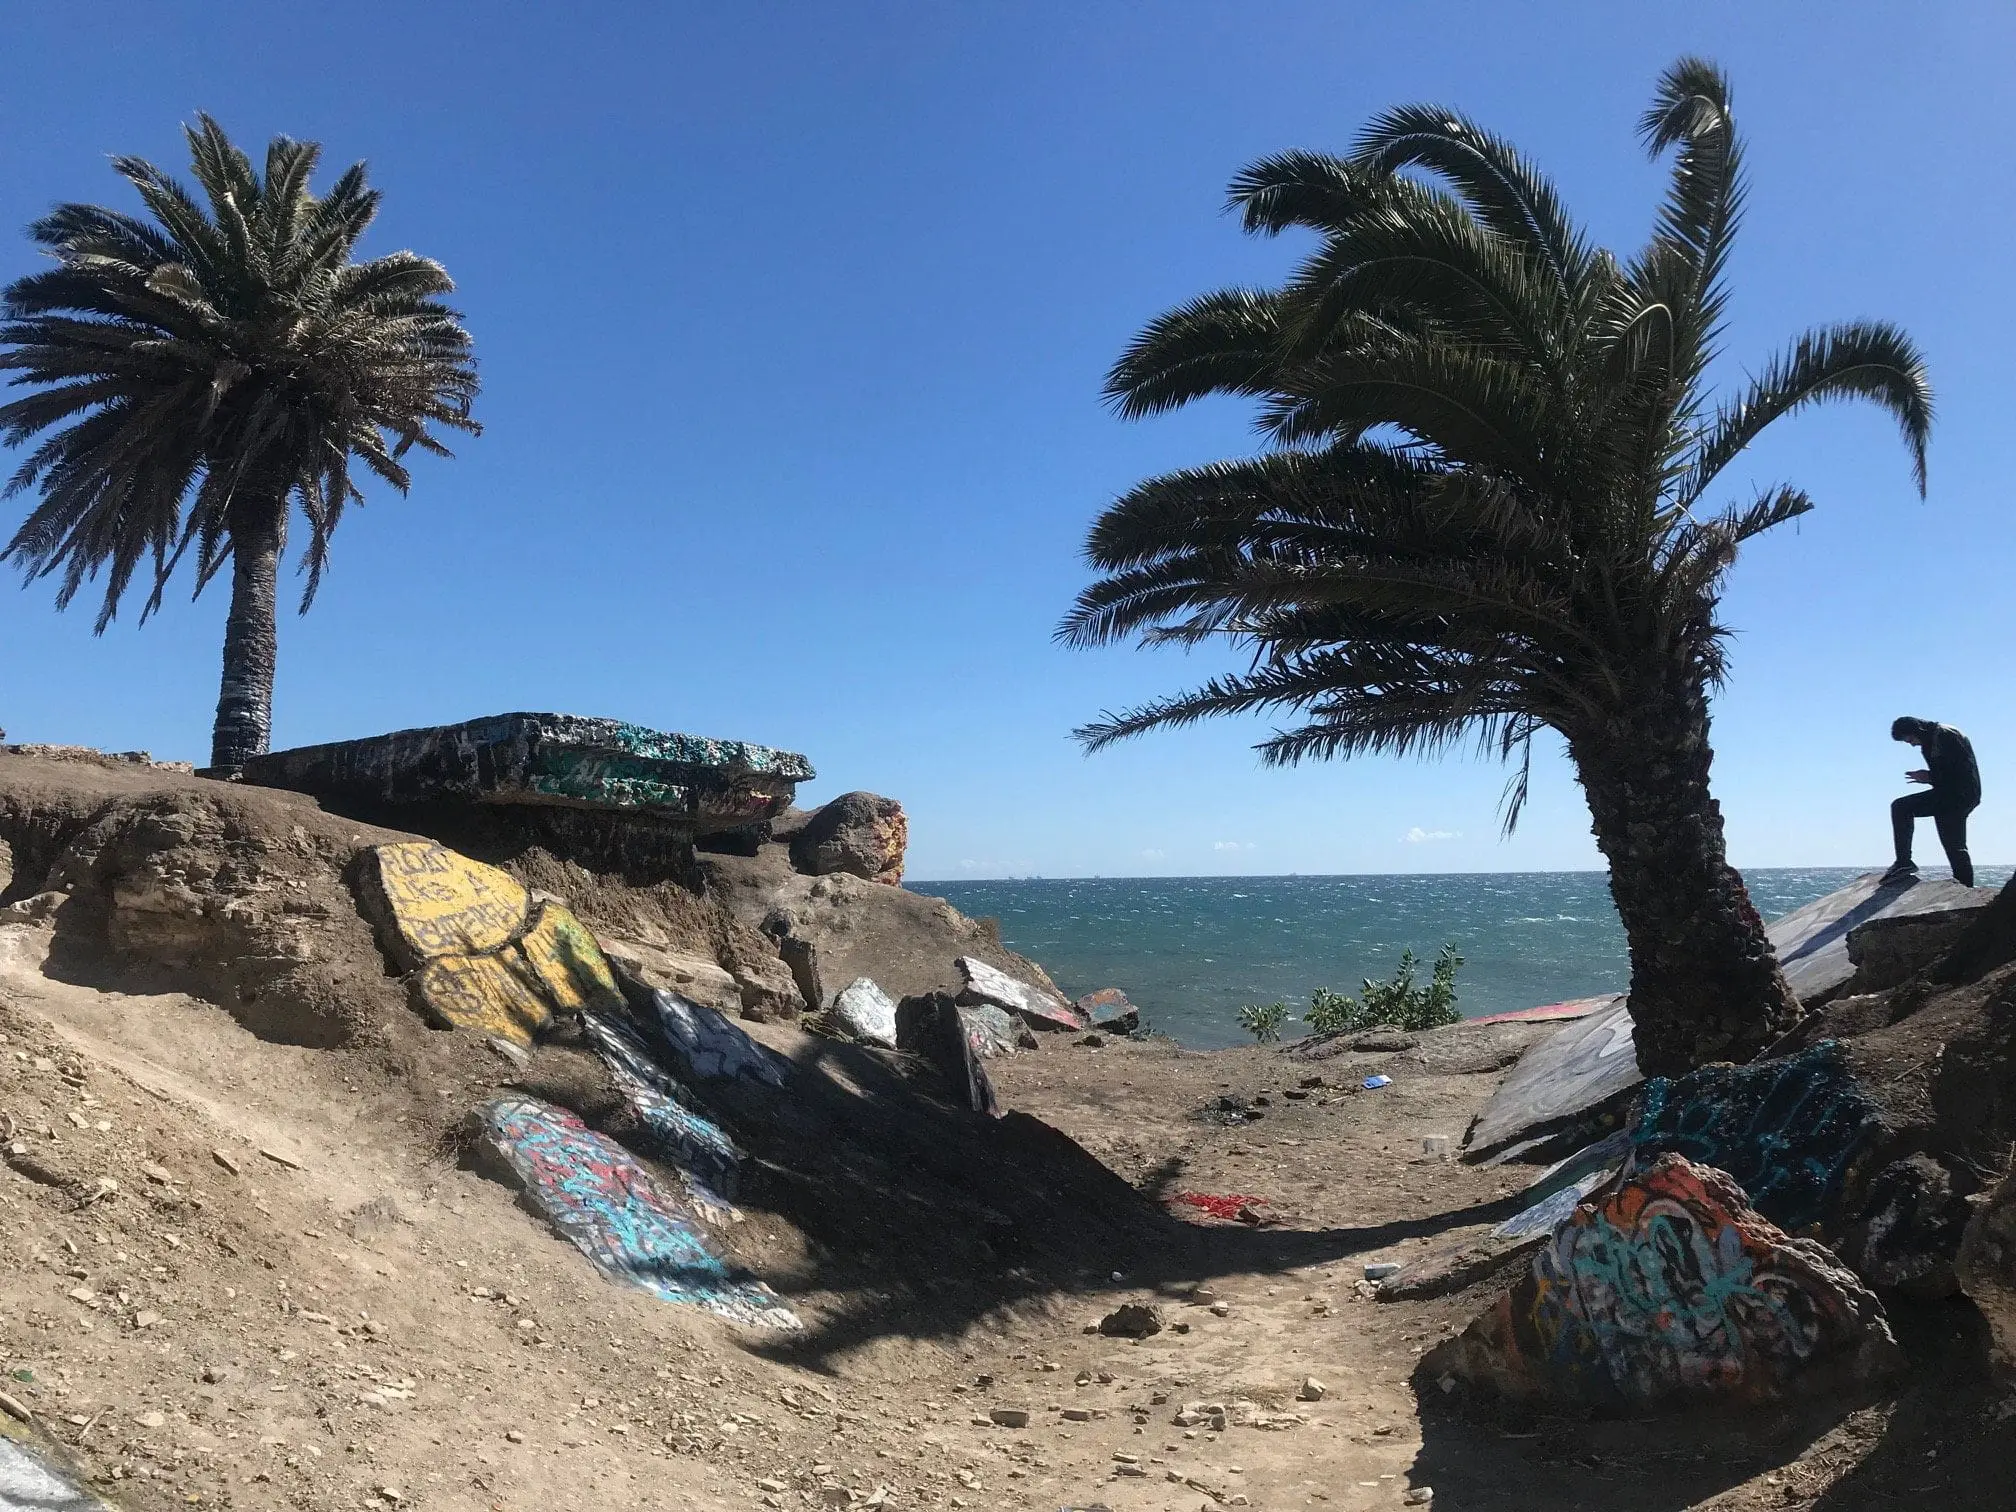 san pedro sunken city graffiti and palm trees.